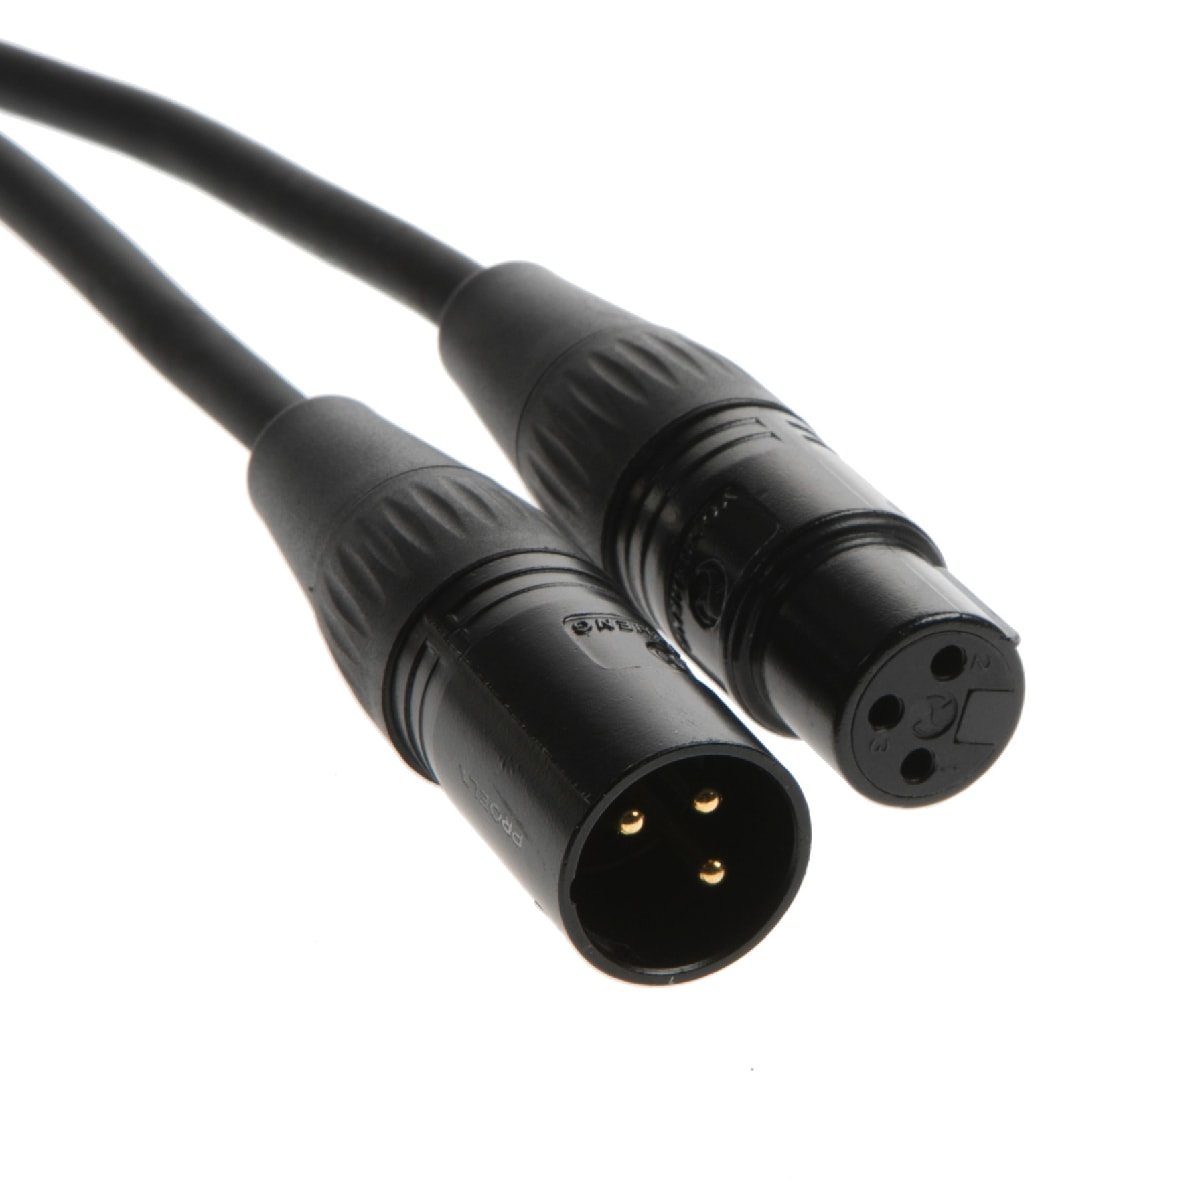  XLR cable (1-2 m)